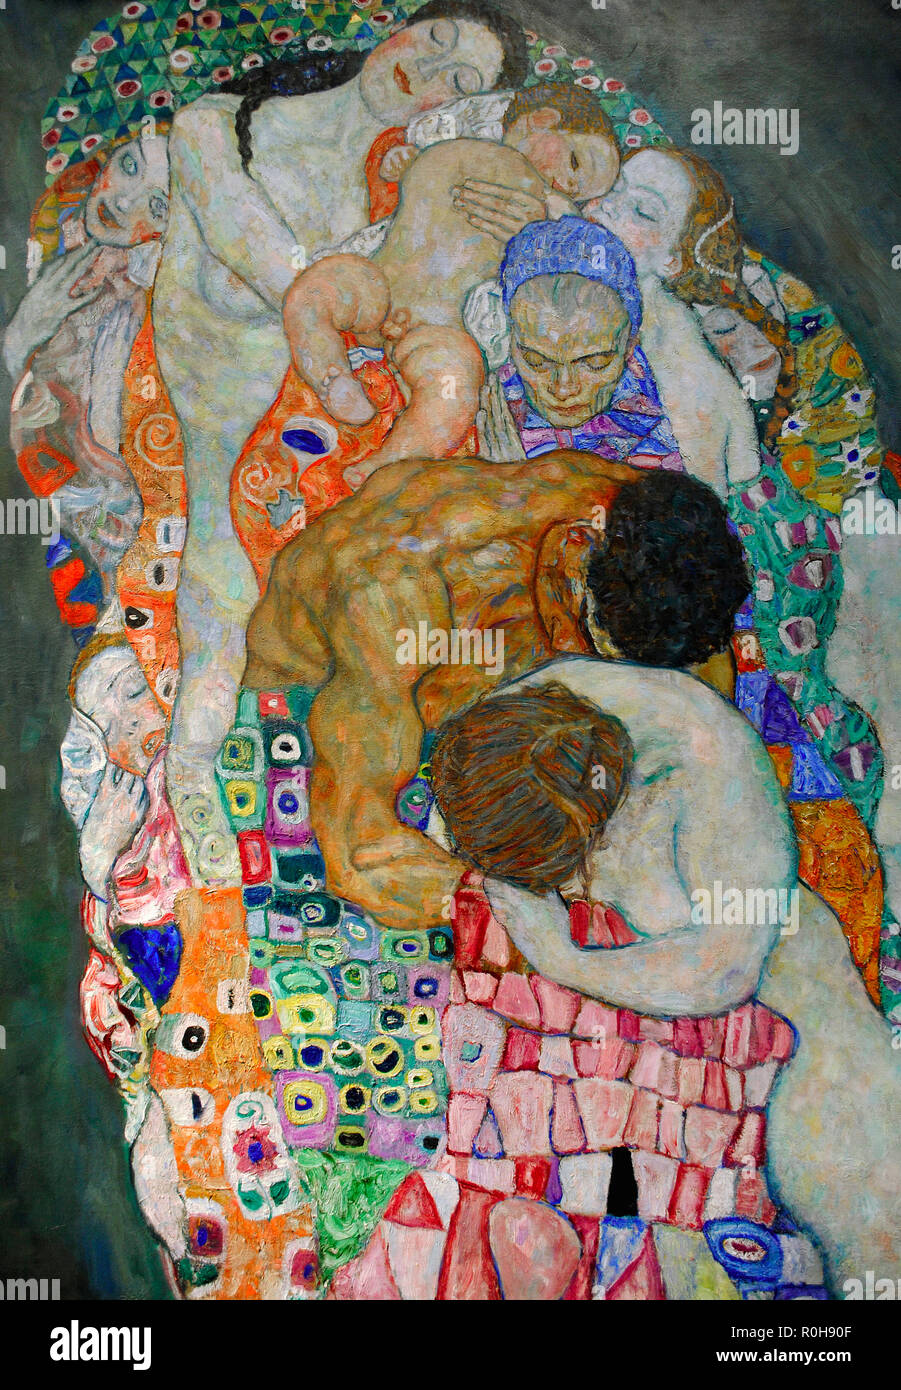 Gustav Klimt (Vienna, 1862-Vienna, 1918). Austrian symbolist painter. Member of the Vienna Secession movement. Morte e Vita "Death and Life", 1915. Detail. Oil on canvas. 178 cm x 198 cm. Leopold Museum. Vienna. Austria. Stock Photo